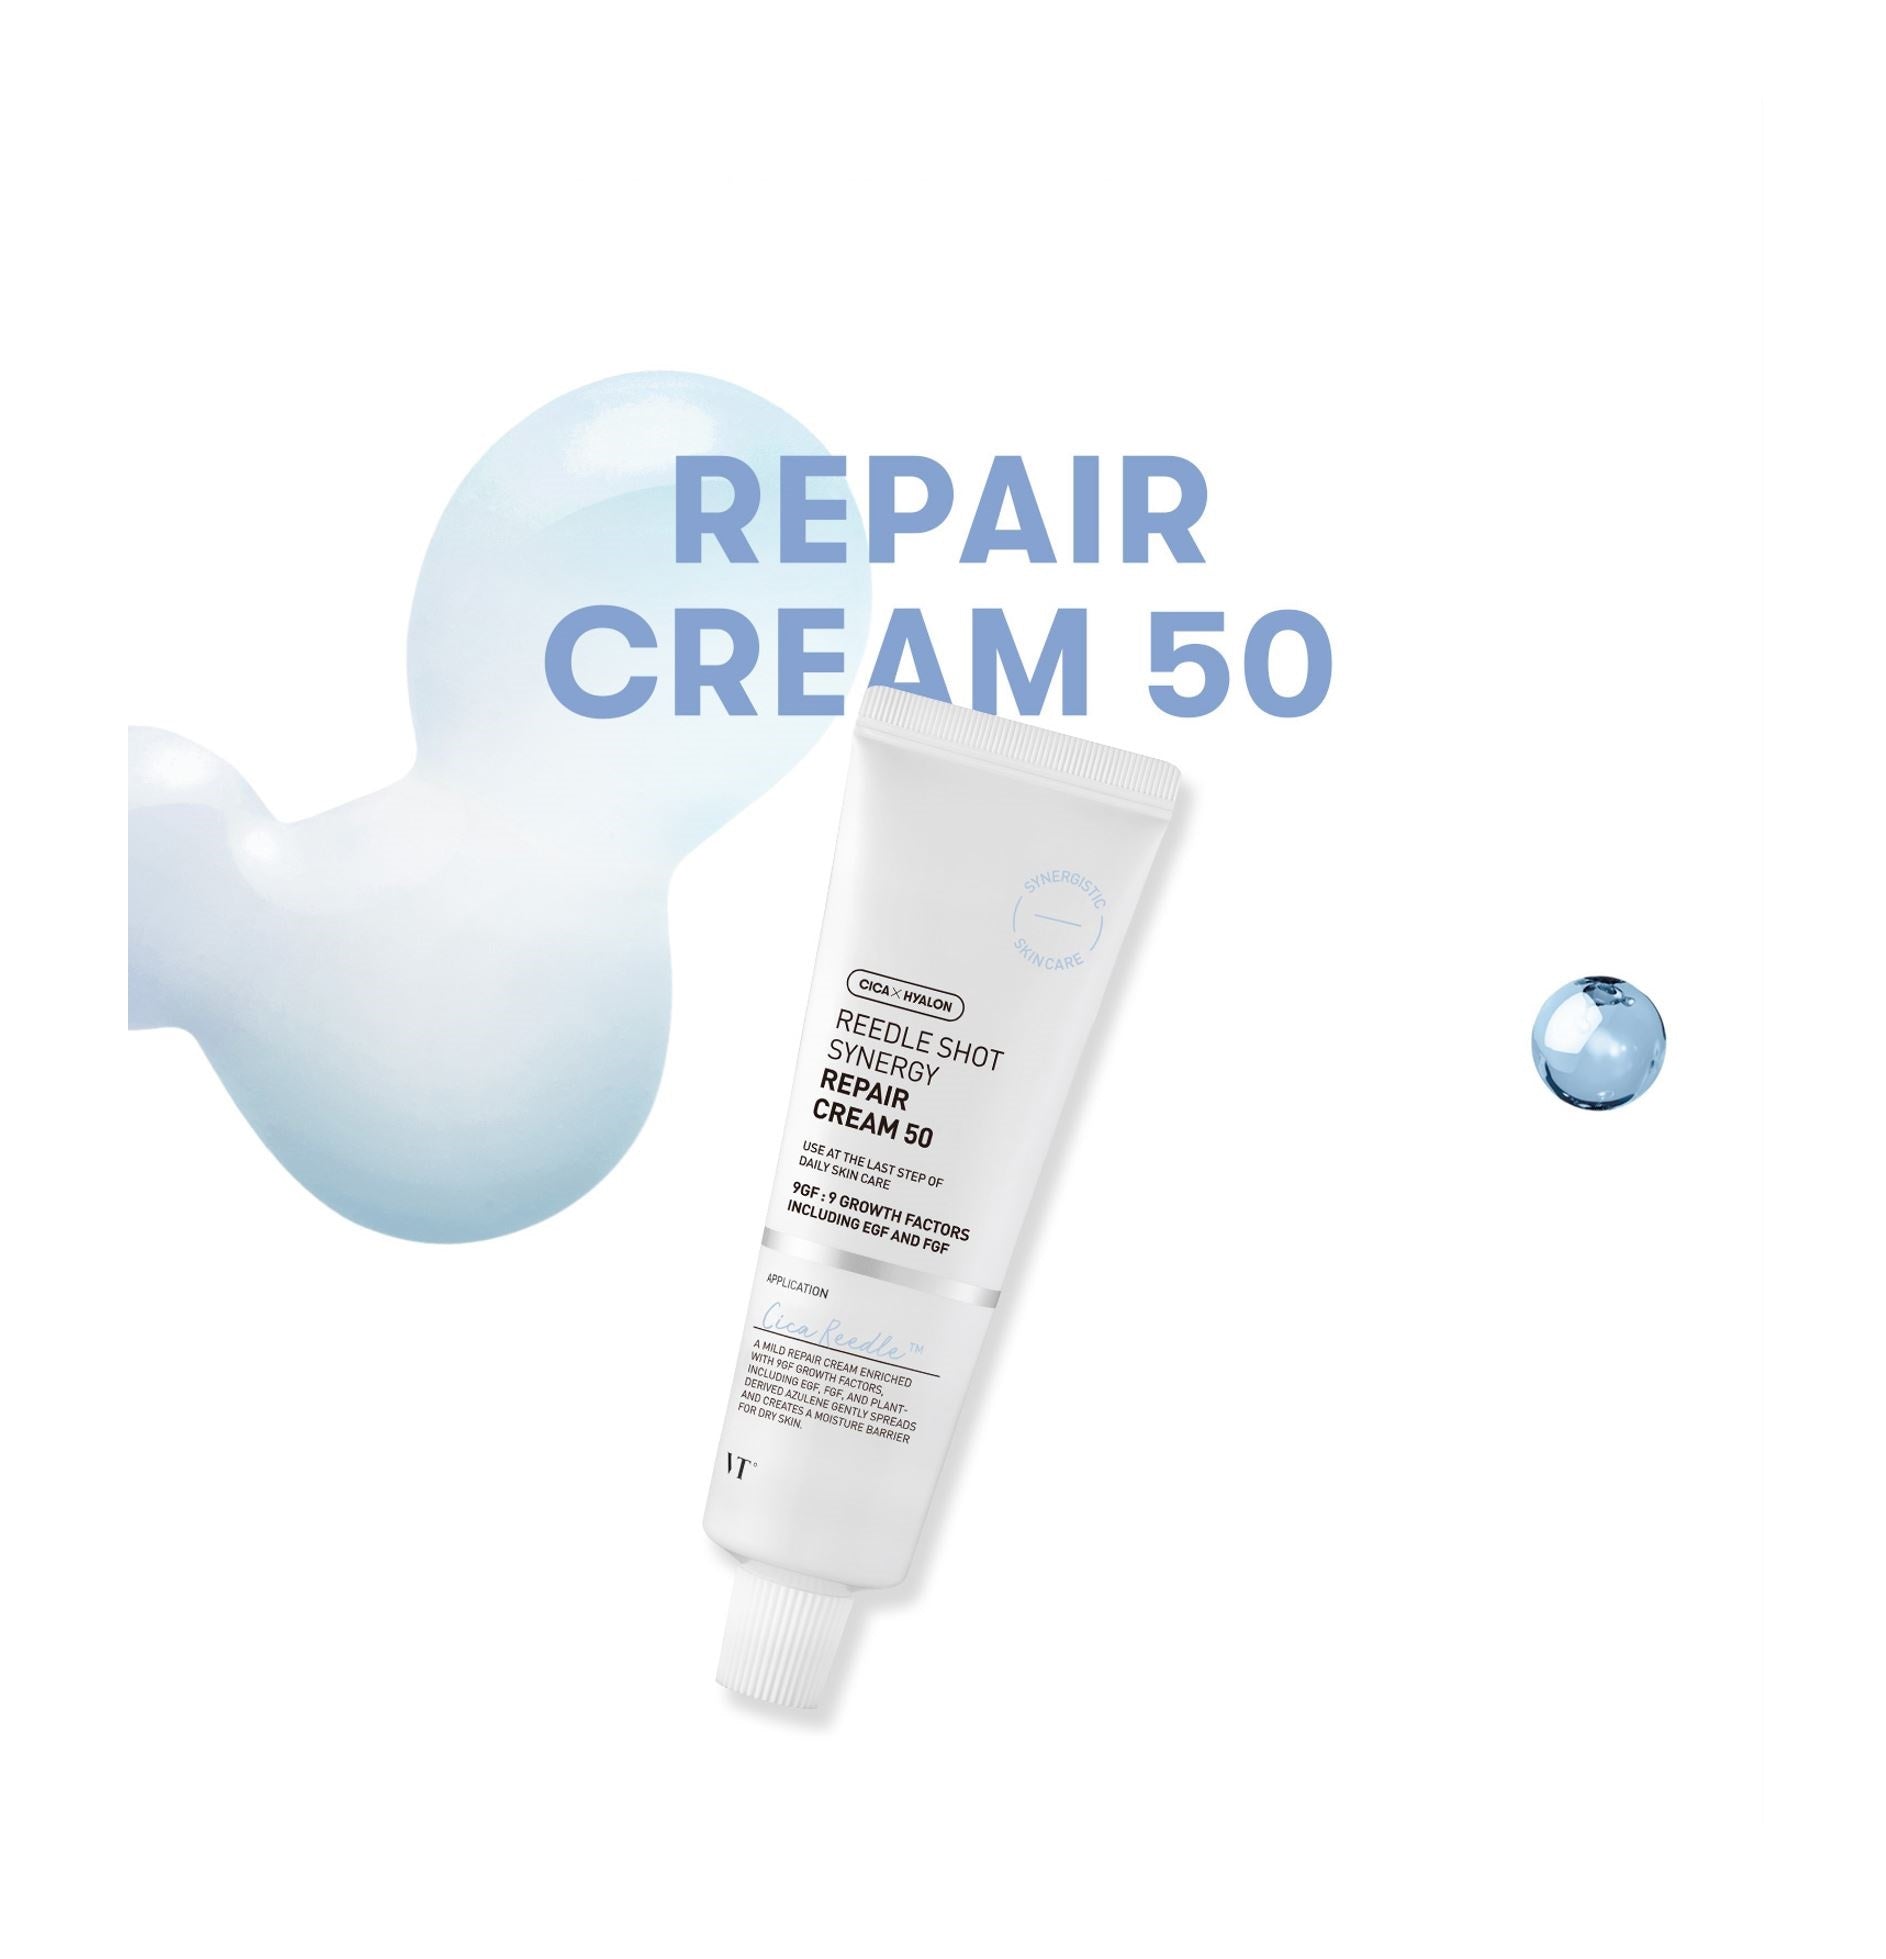 Reedle Shot Synergy Repair Cream 50